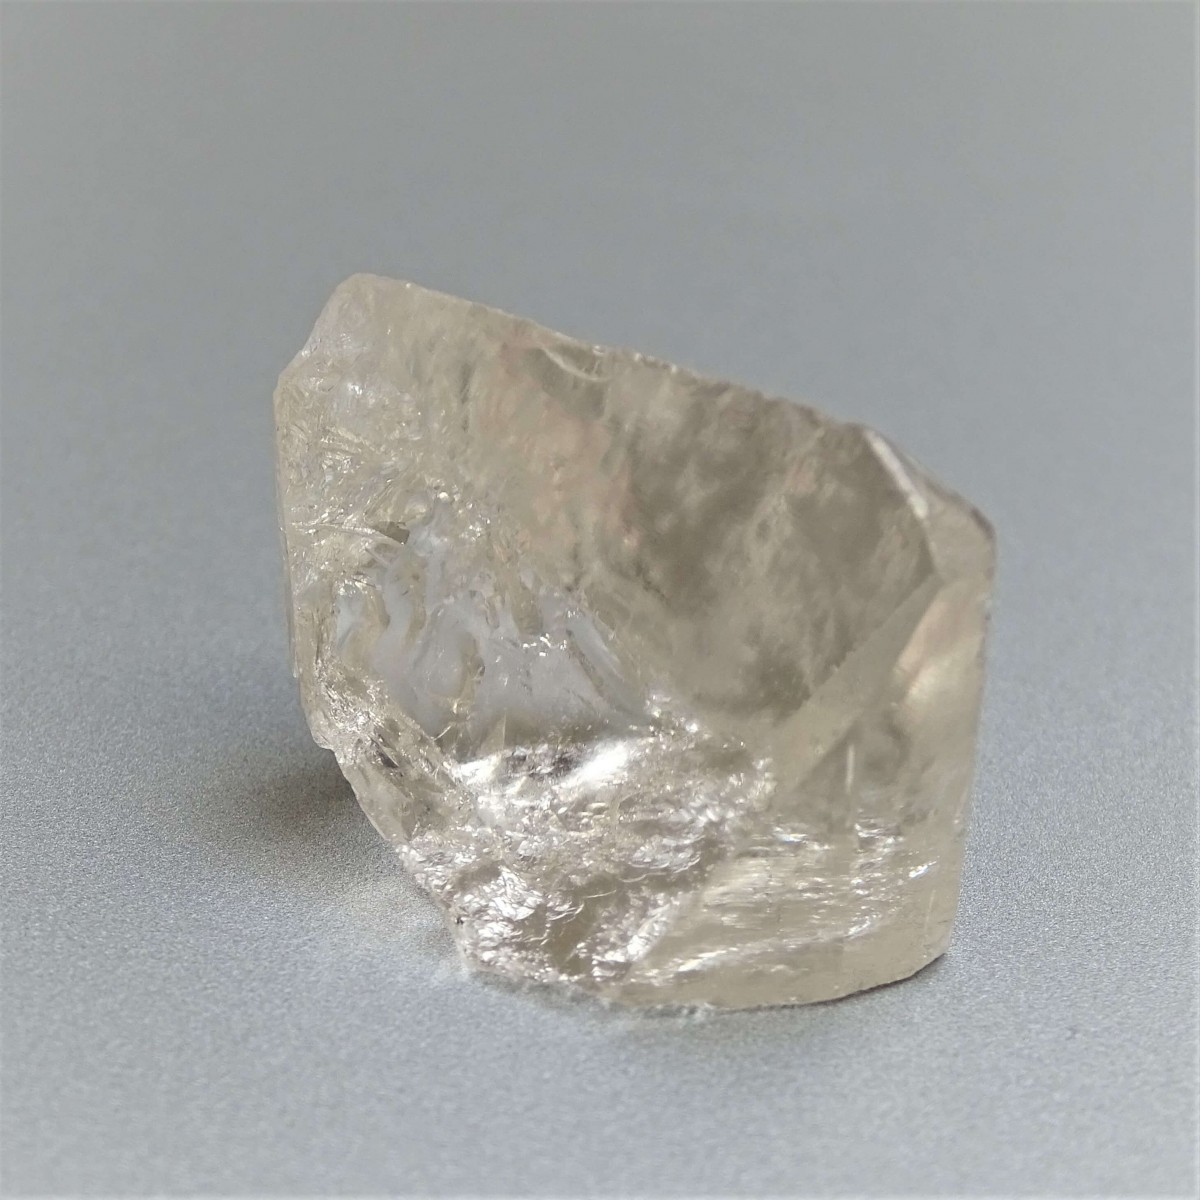 Topaz natural crystal 17g, Pakistan